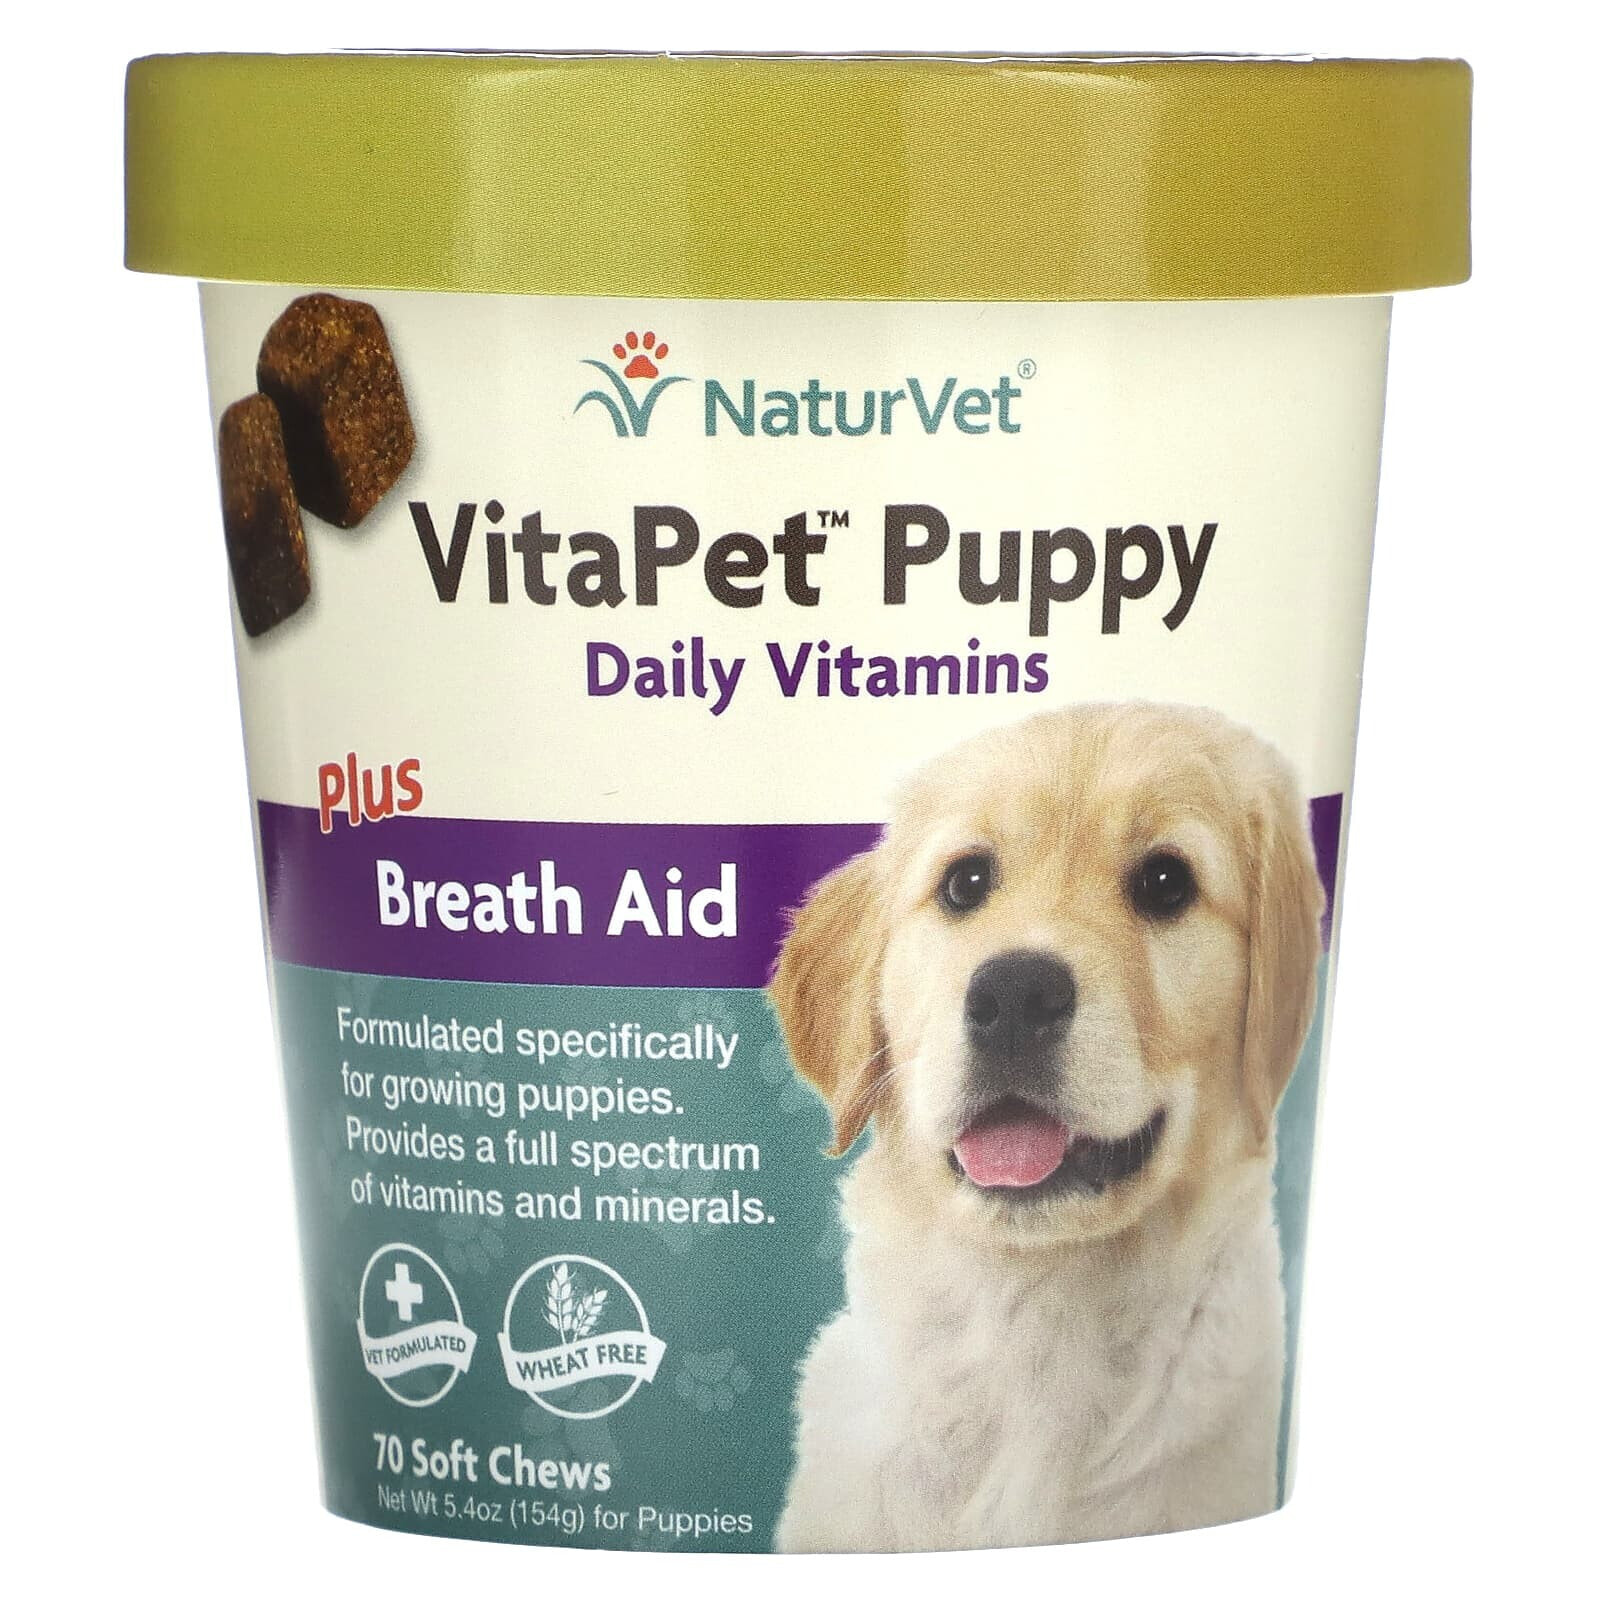 VitaPet Puppy, Daily Vitamins Plus Breath Aid, For Puppies, 70 Soft Chews, 5.4 oz (154 g)